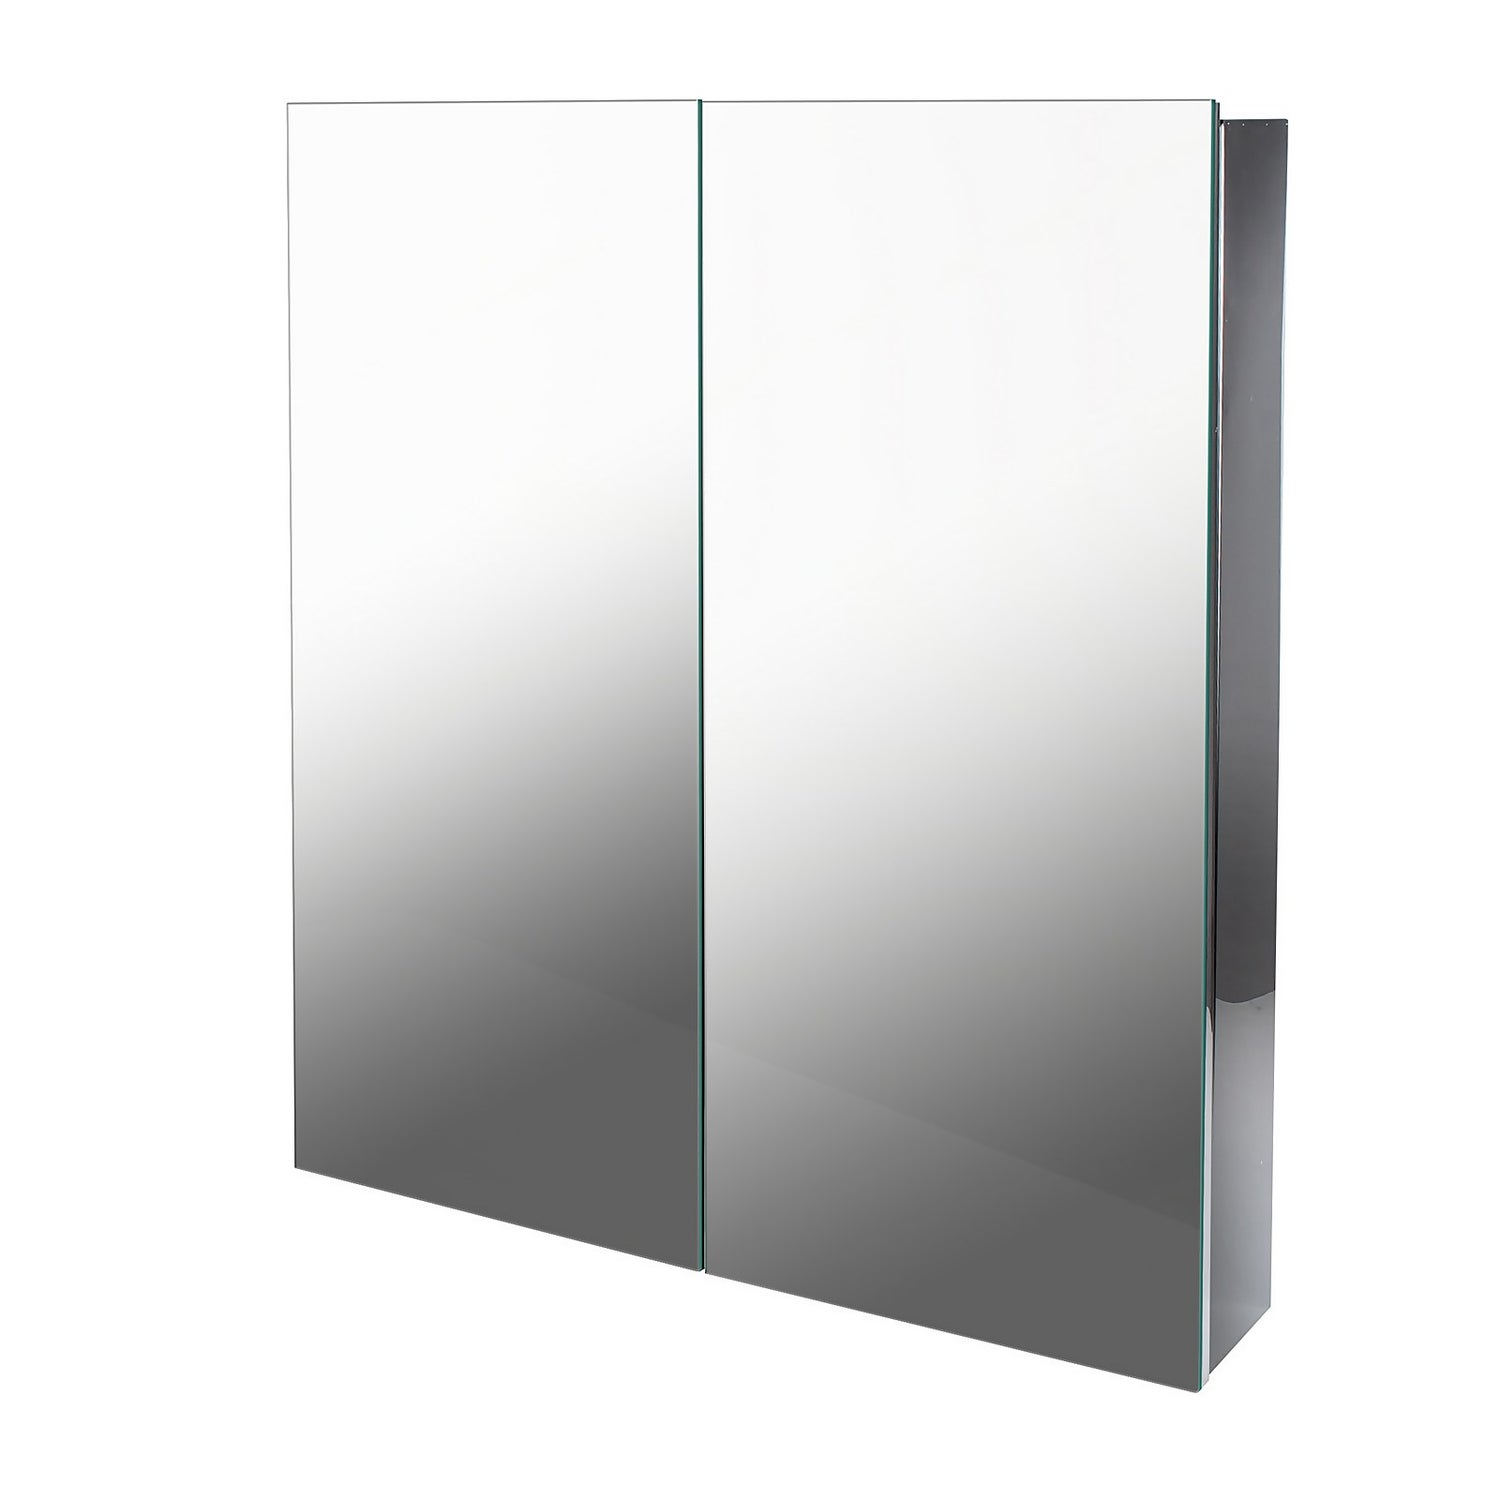 Large Mirrored Bathroom Cabinet, Double Door - Stainless Steel